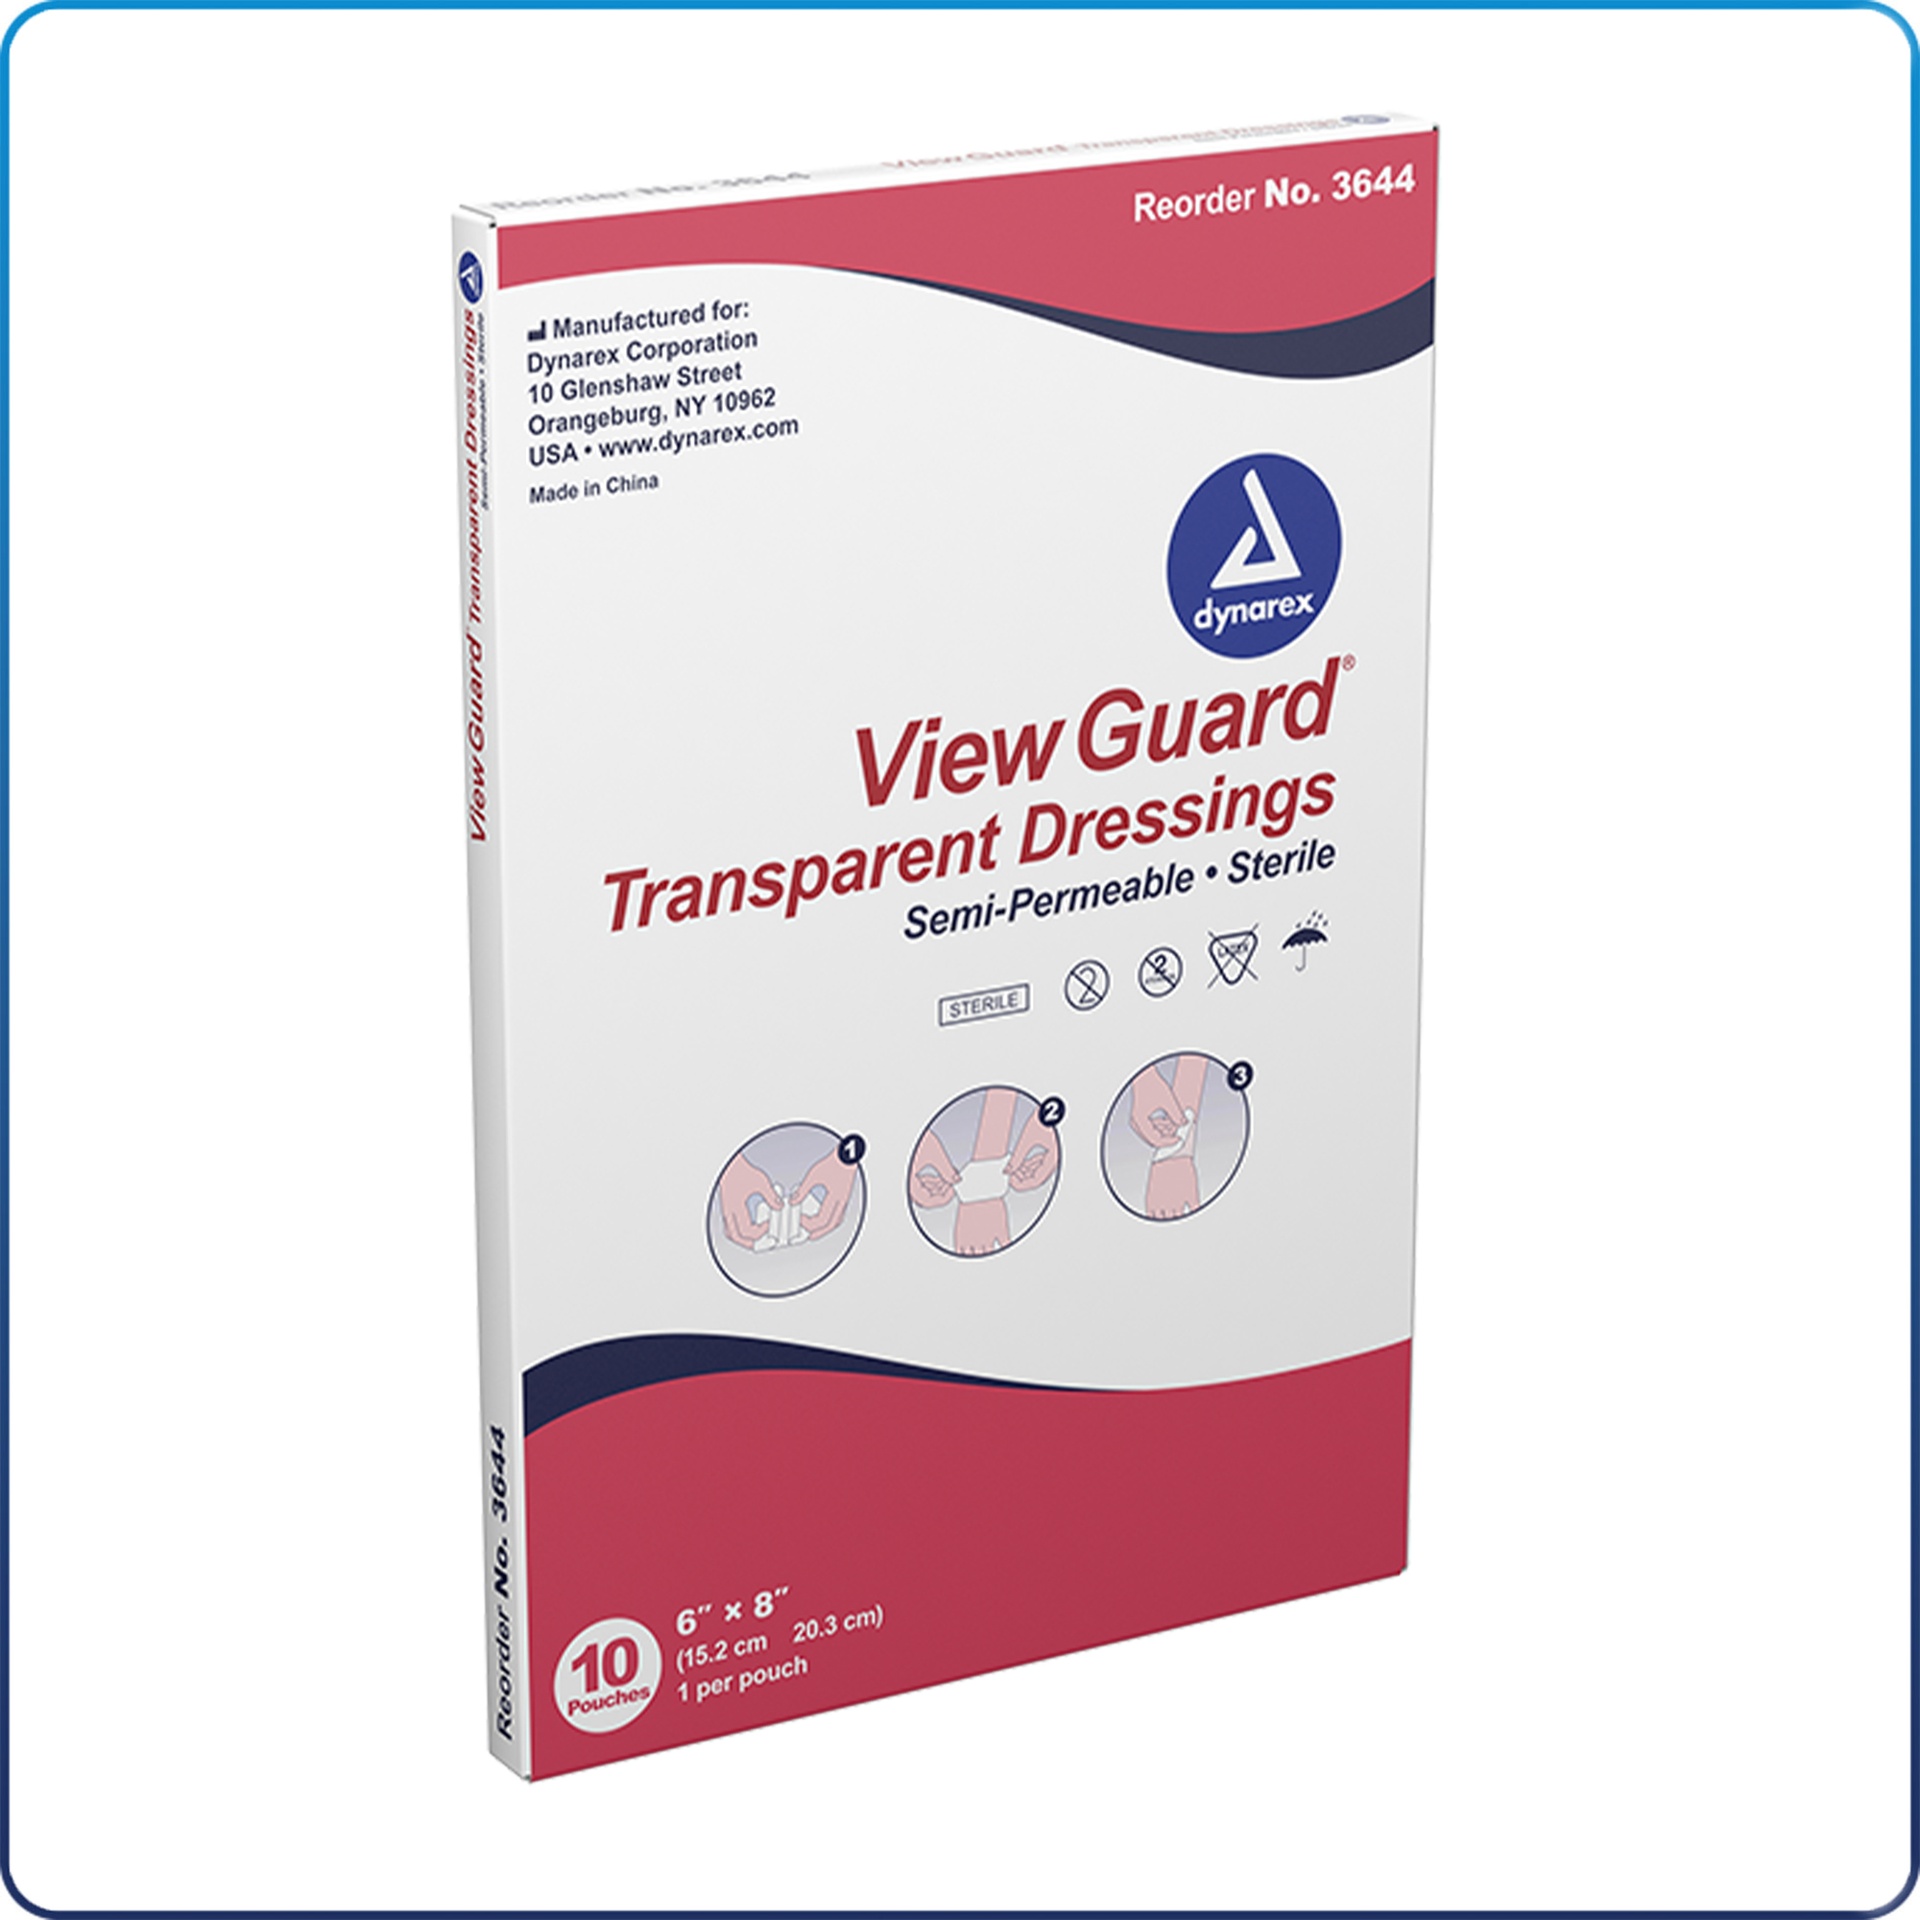 View Guard Transparent Dressings - Sterile 4" x 4.75" 50/bx